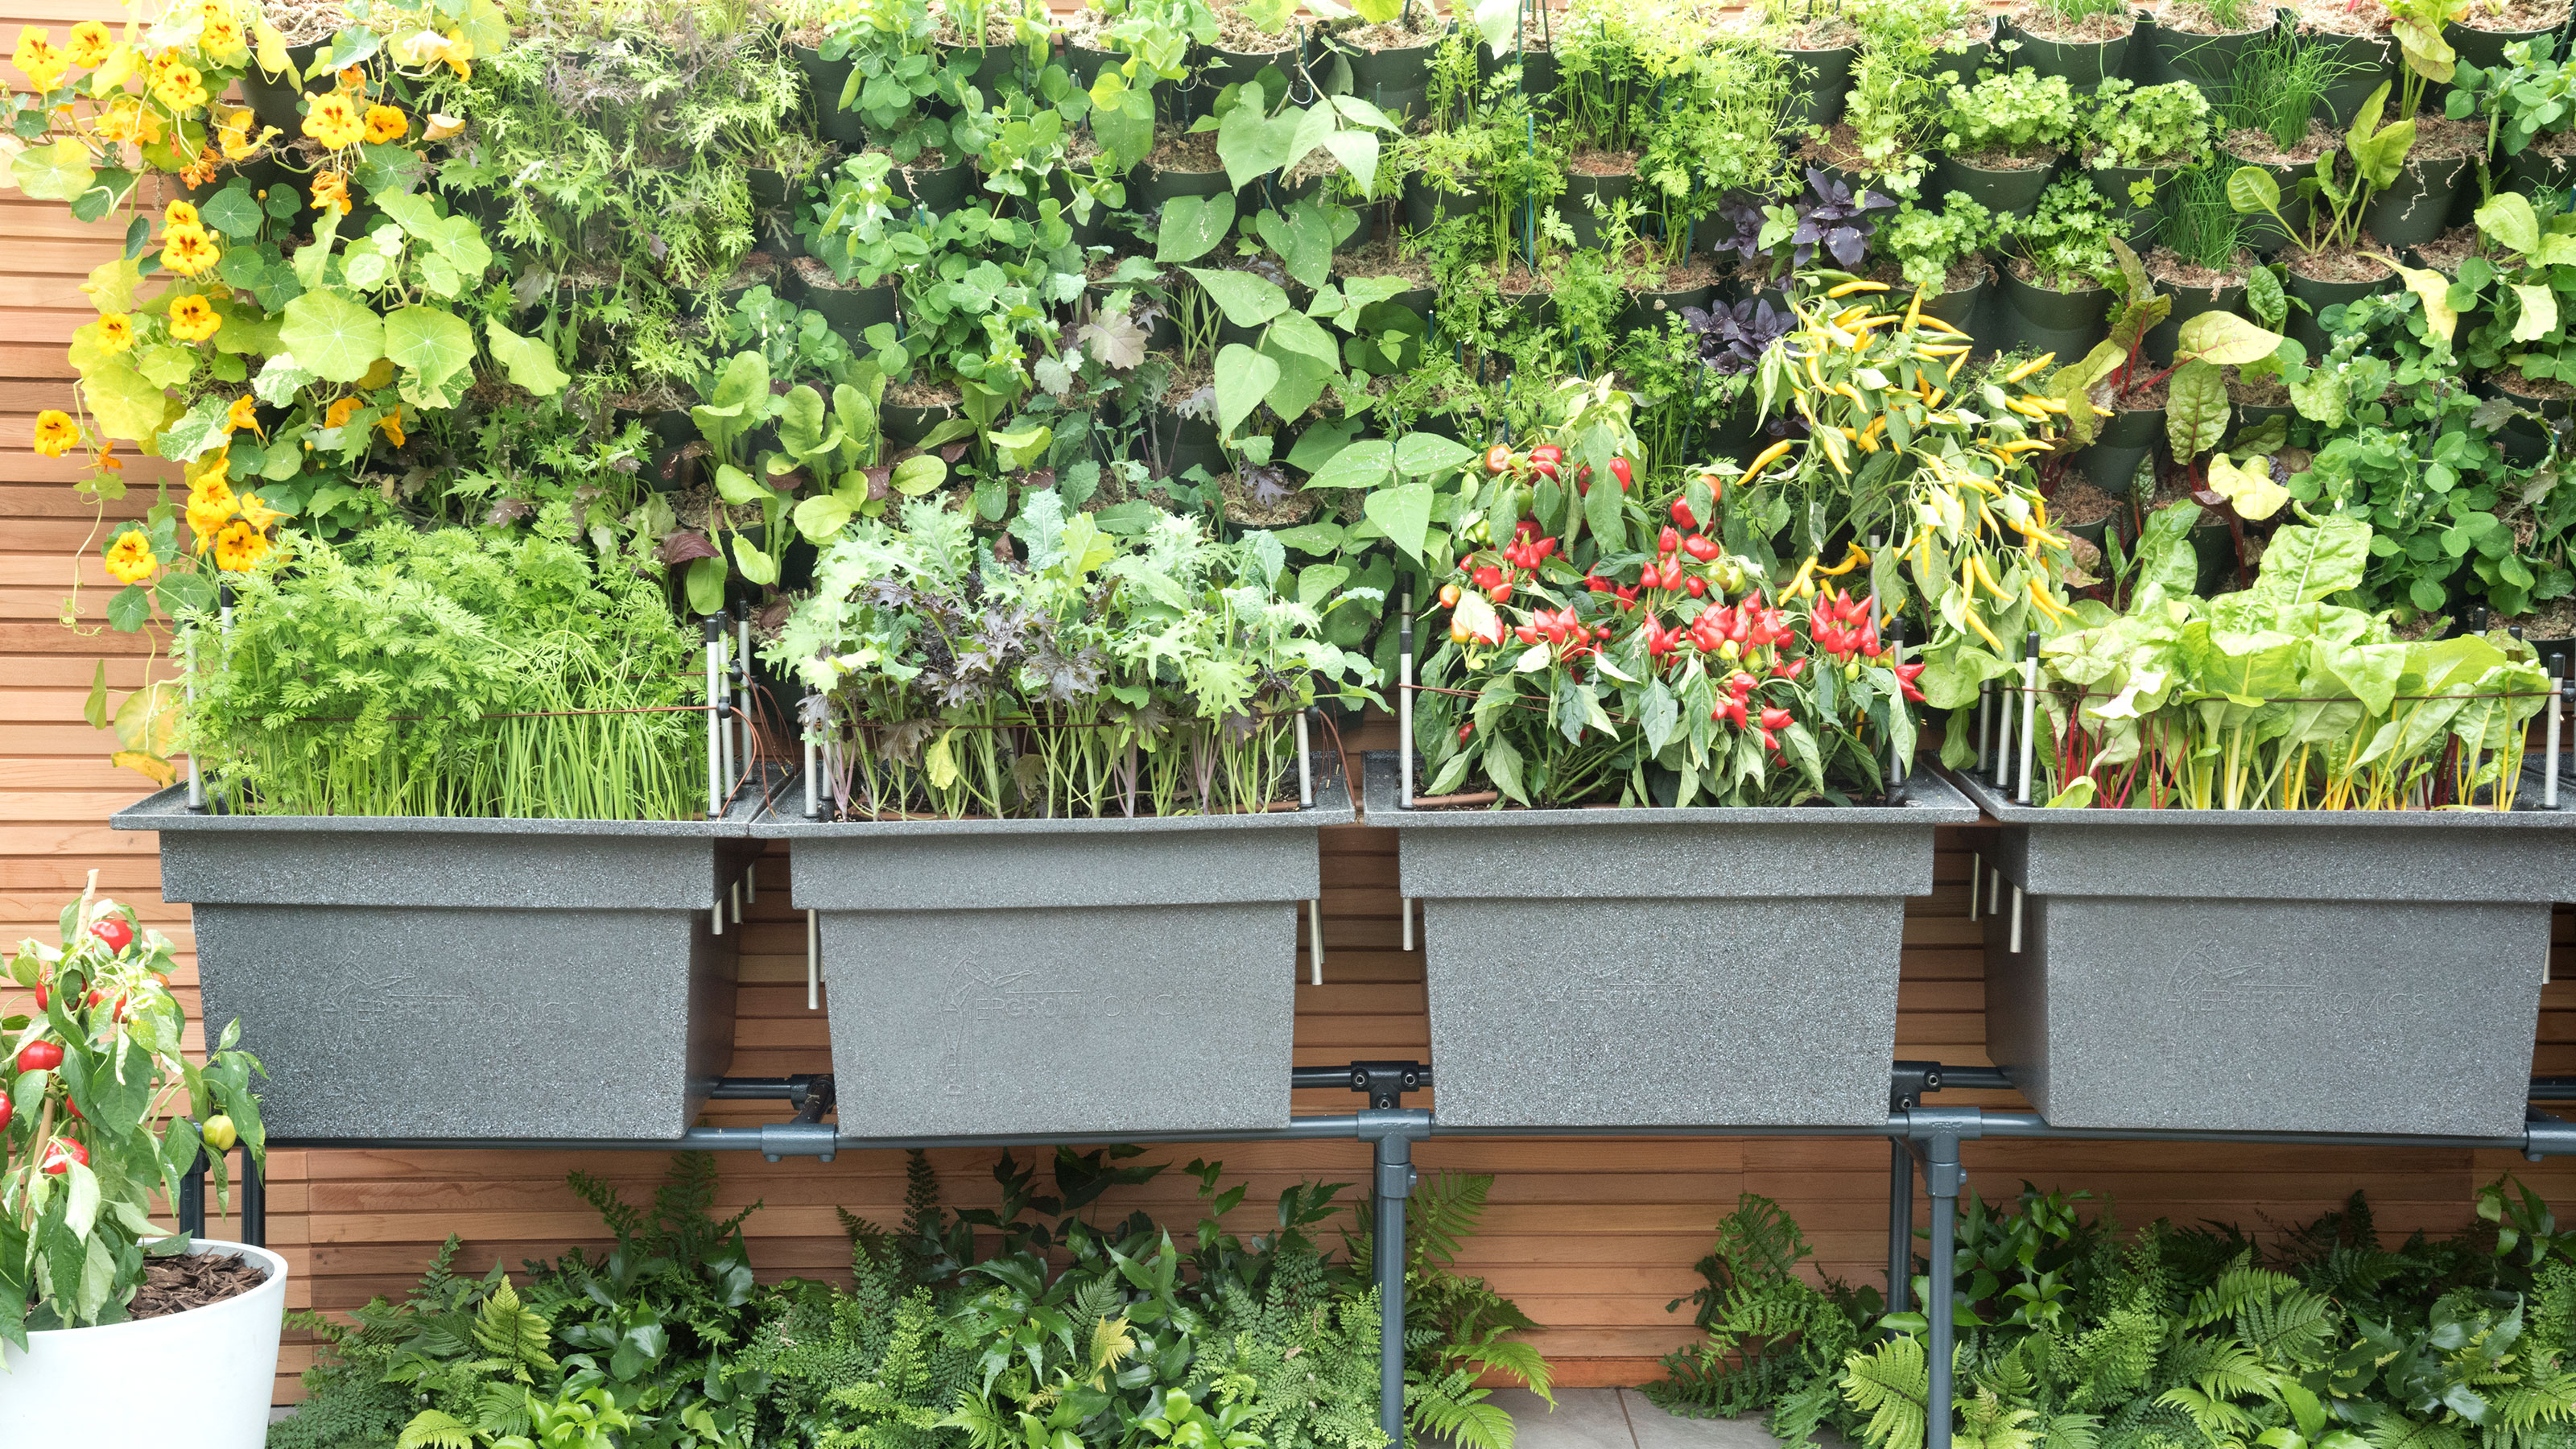 Vertical garden ideas: 12 ways to maximize plant space | Gardeningetc